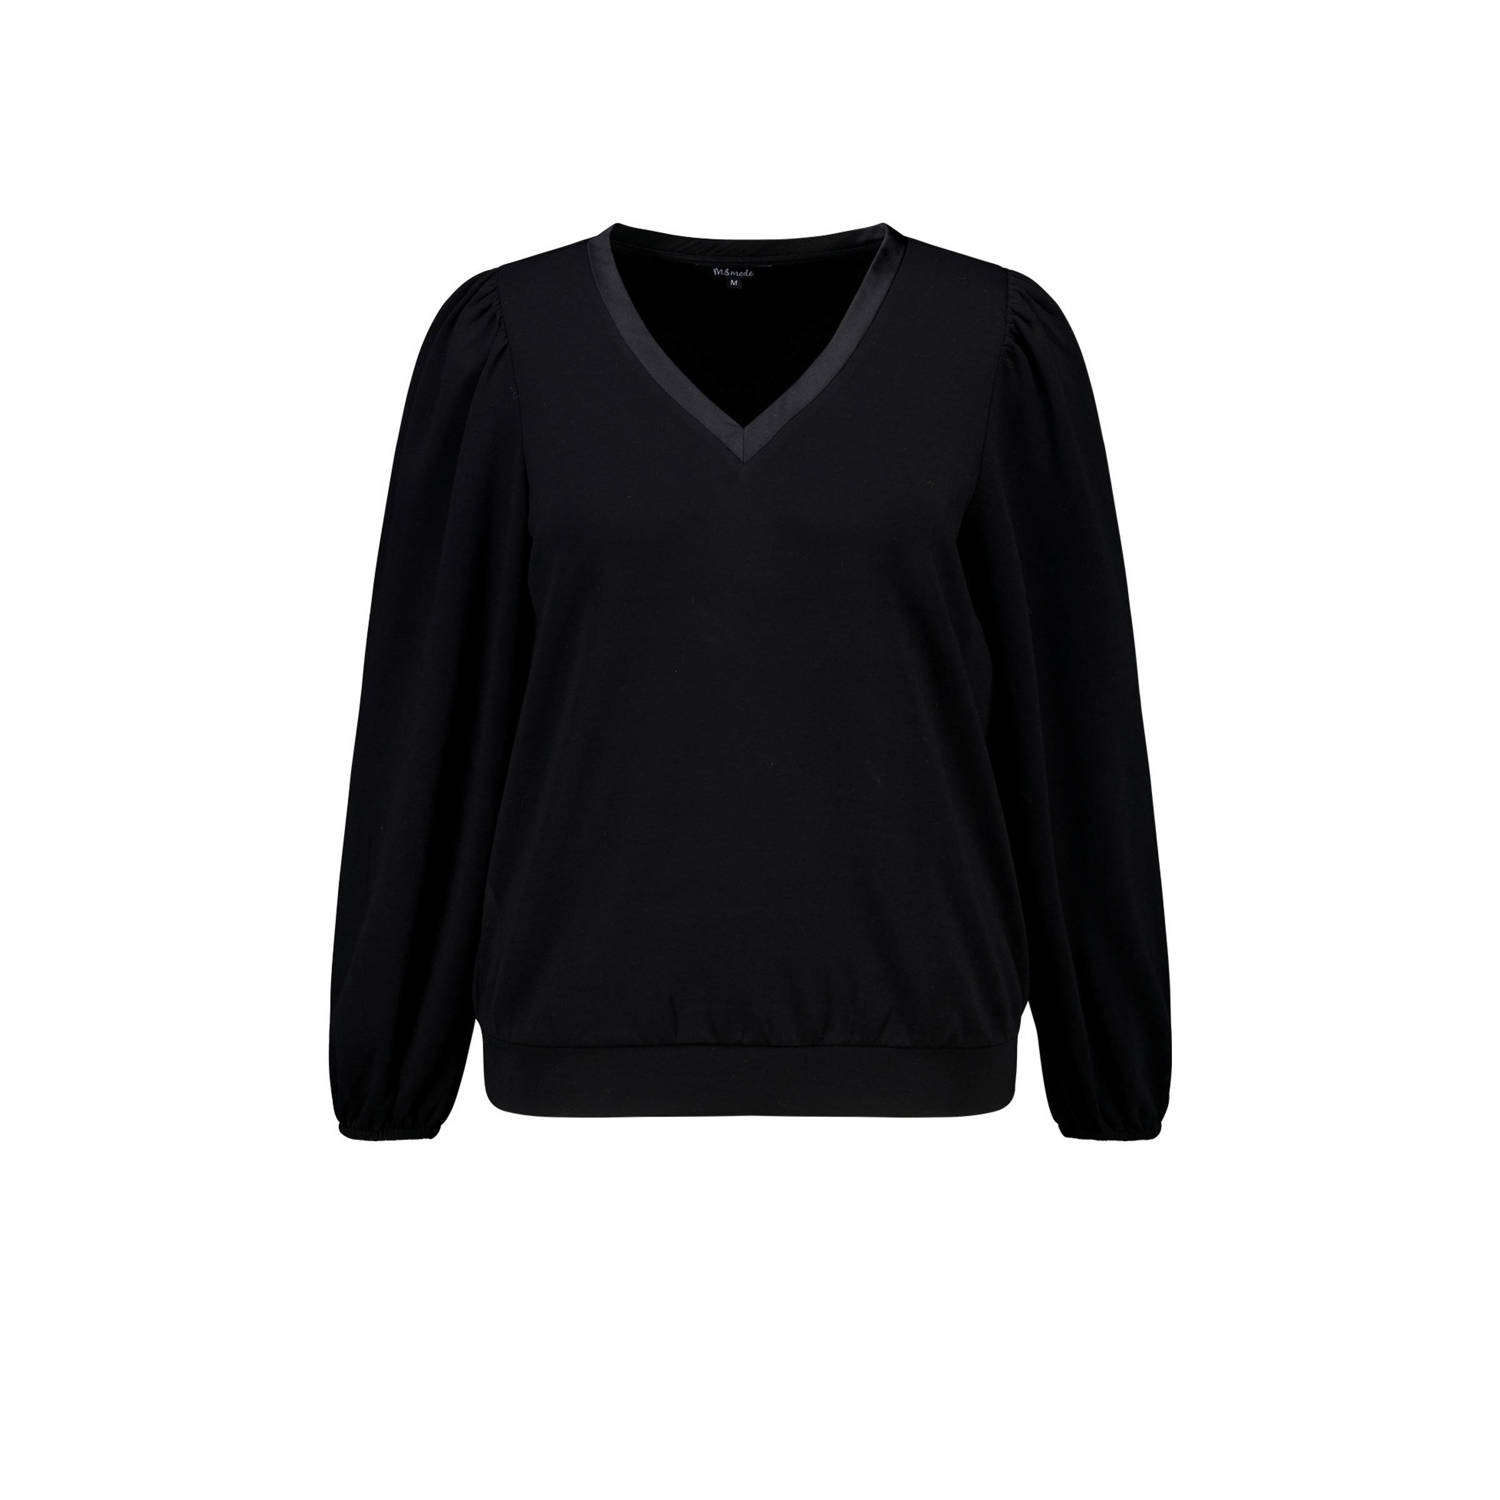 MS Mode sweater zwart